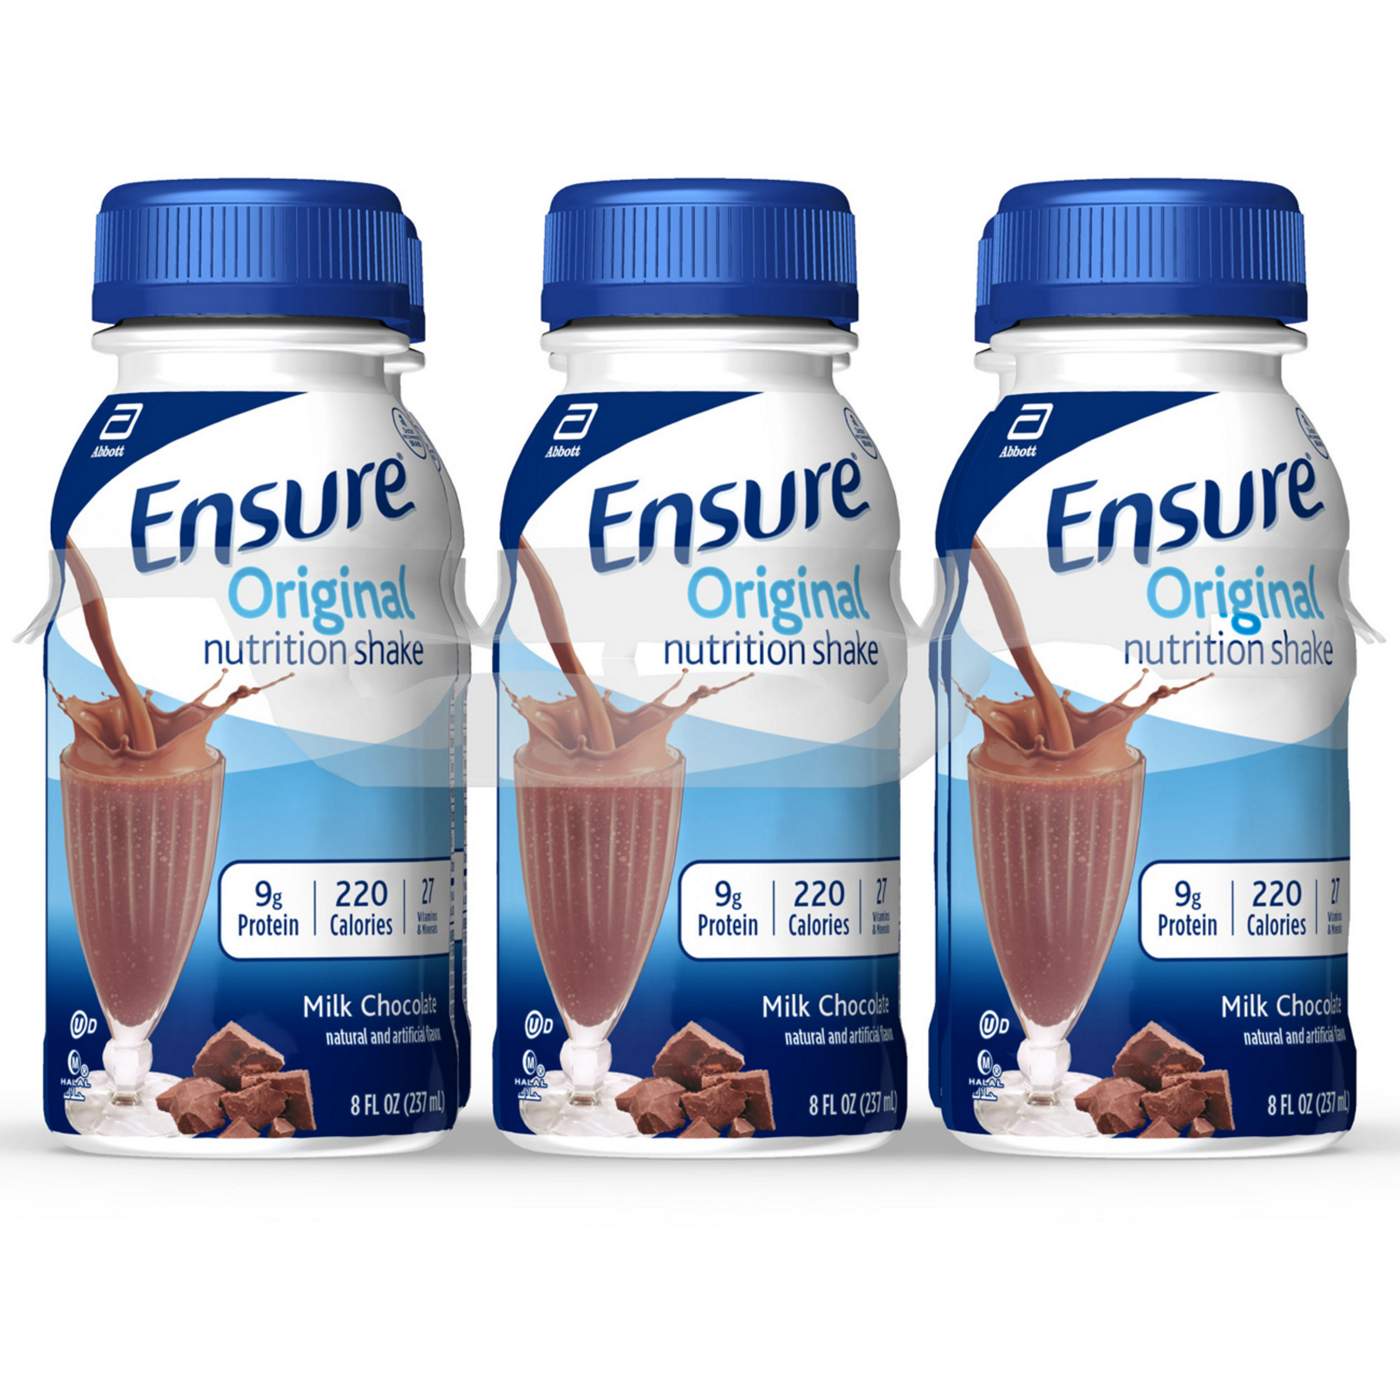 Ensure Original Nutrition Shake - Milk Chocolate - Shop Diet